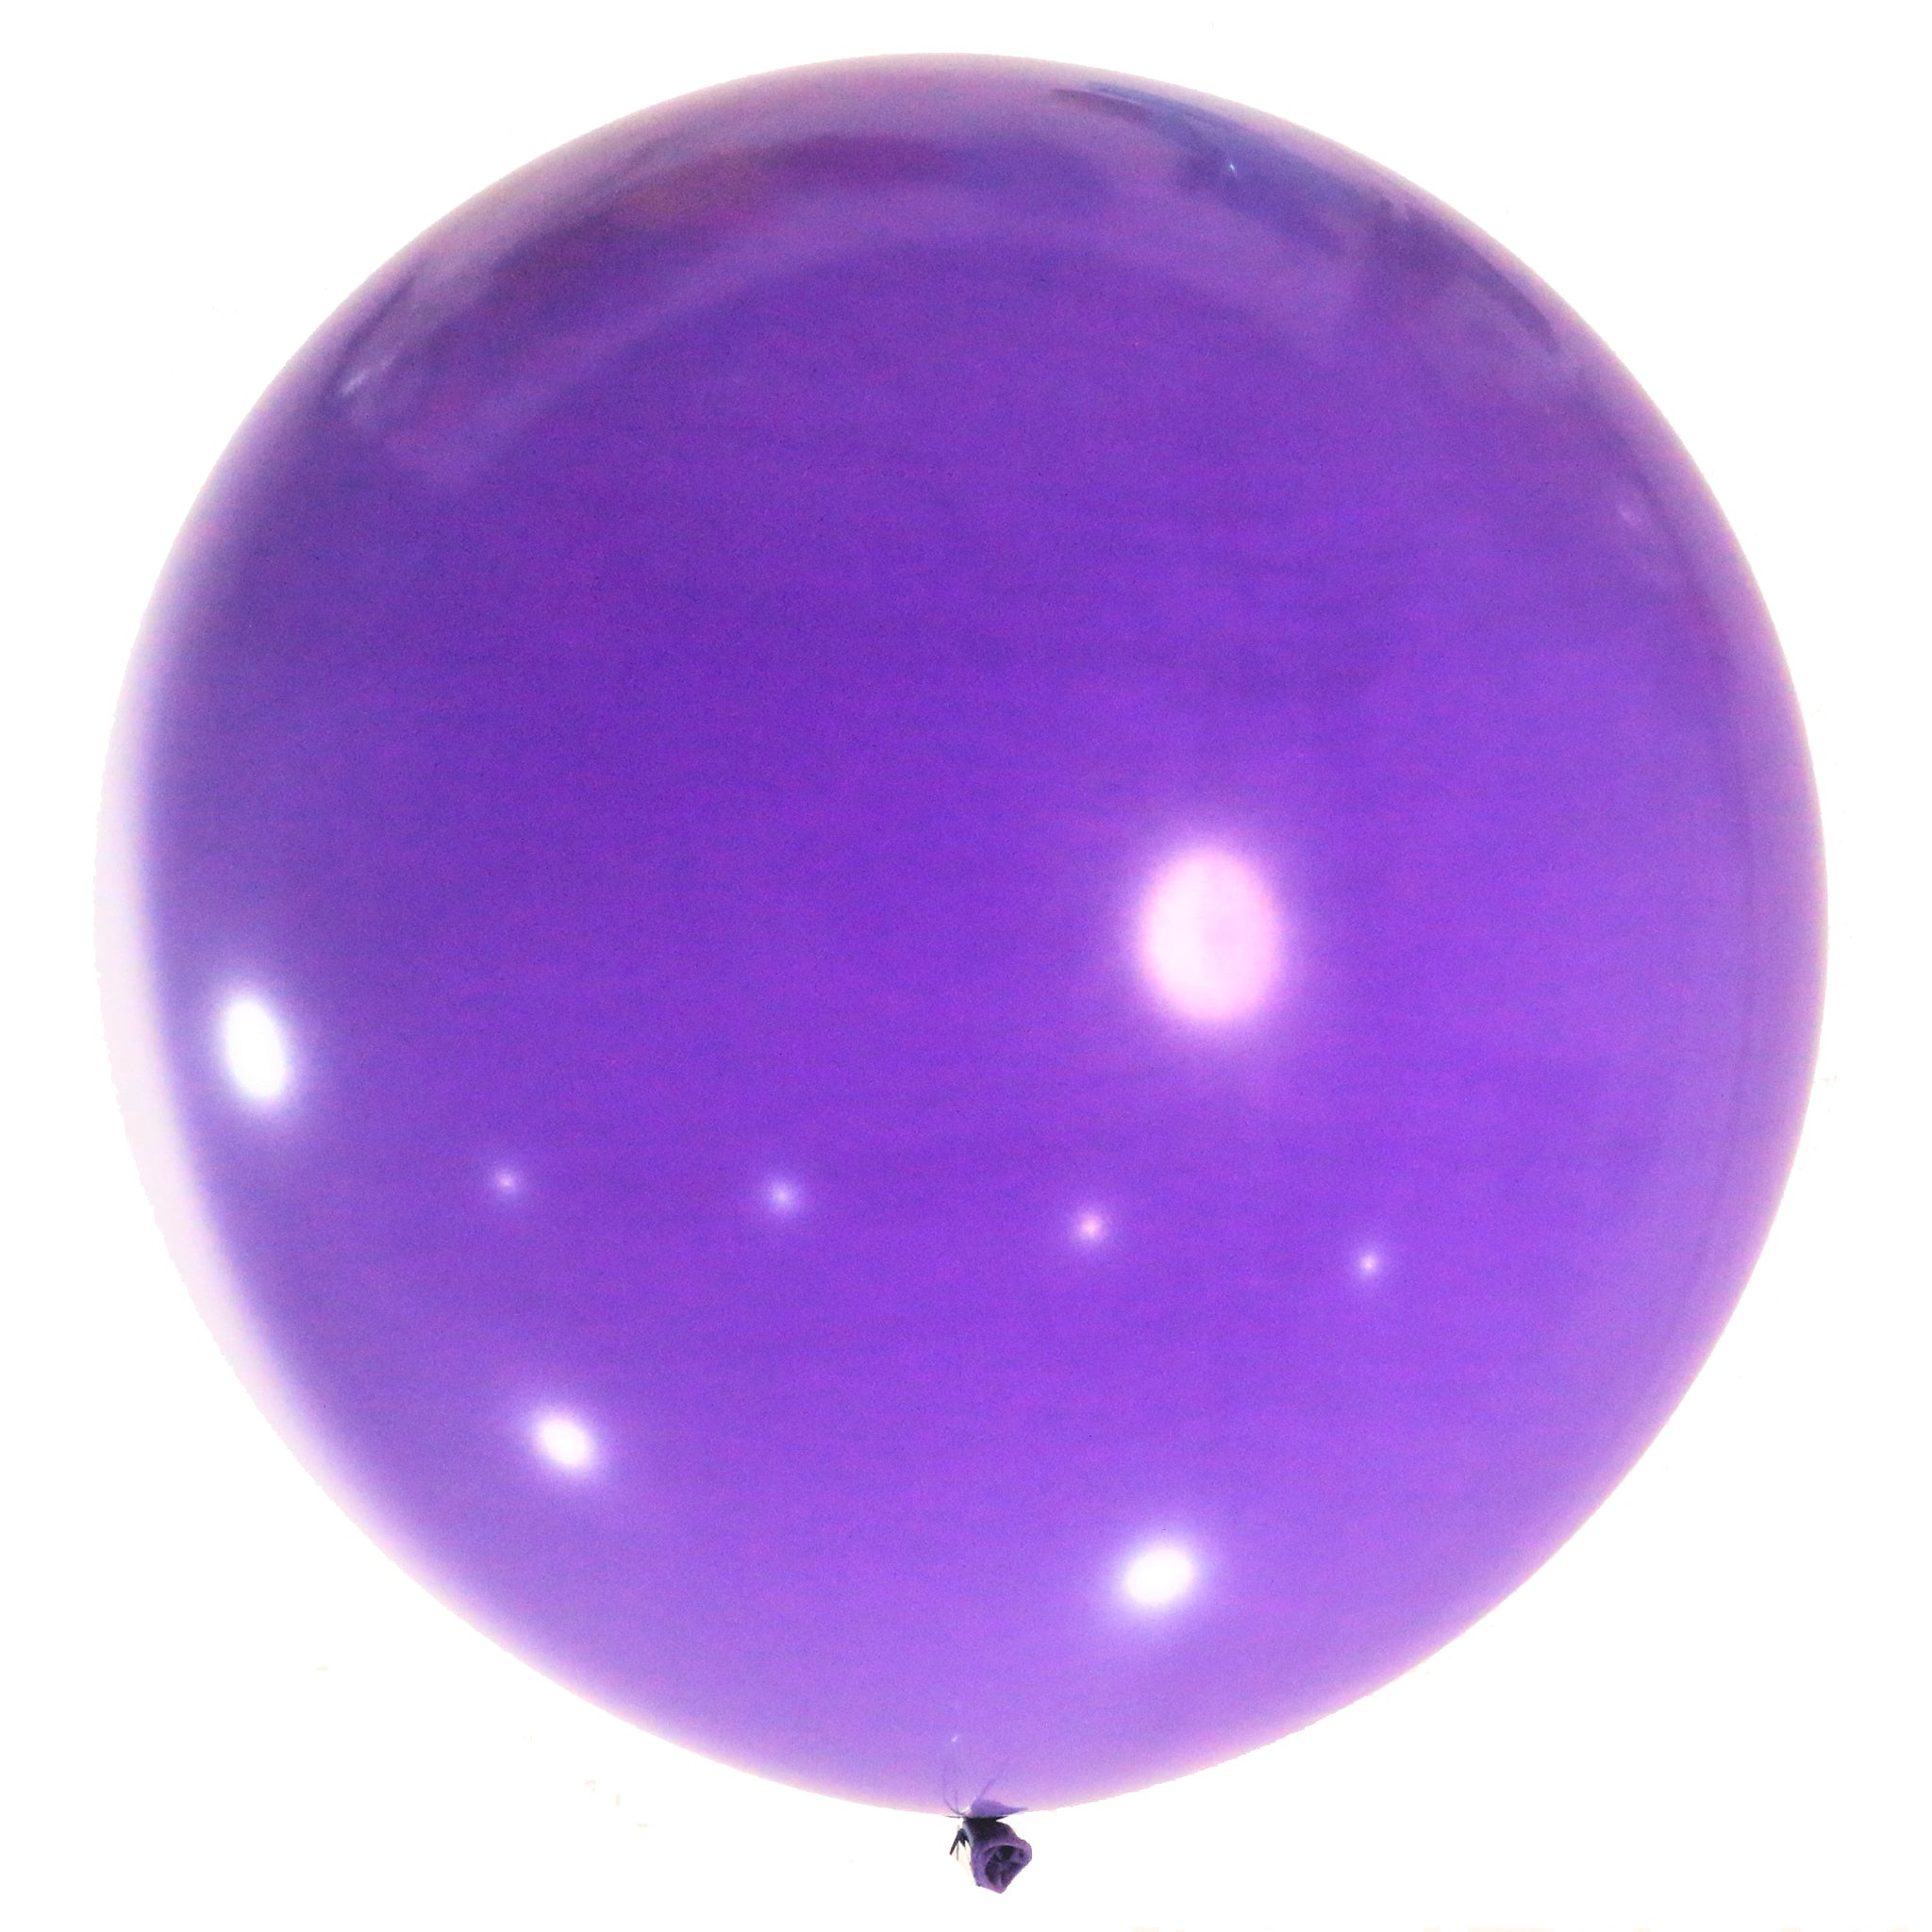 Dark purple 3 feet latex balloons for sale online in Dubai